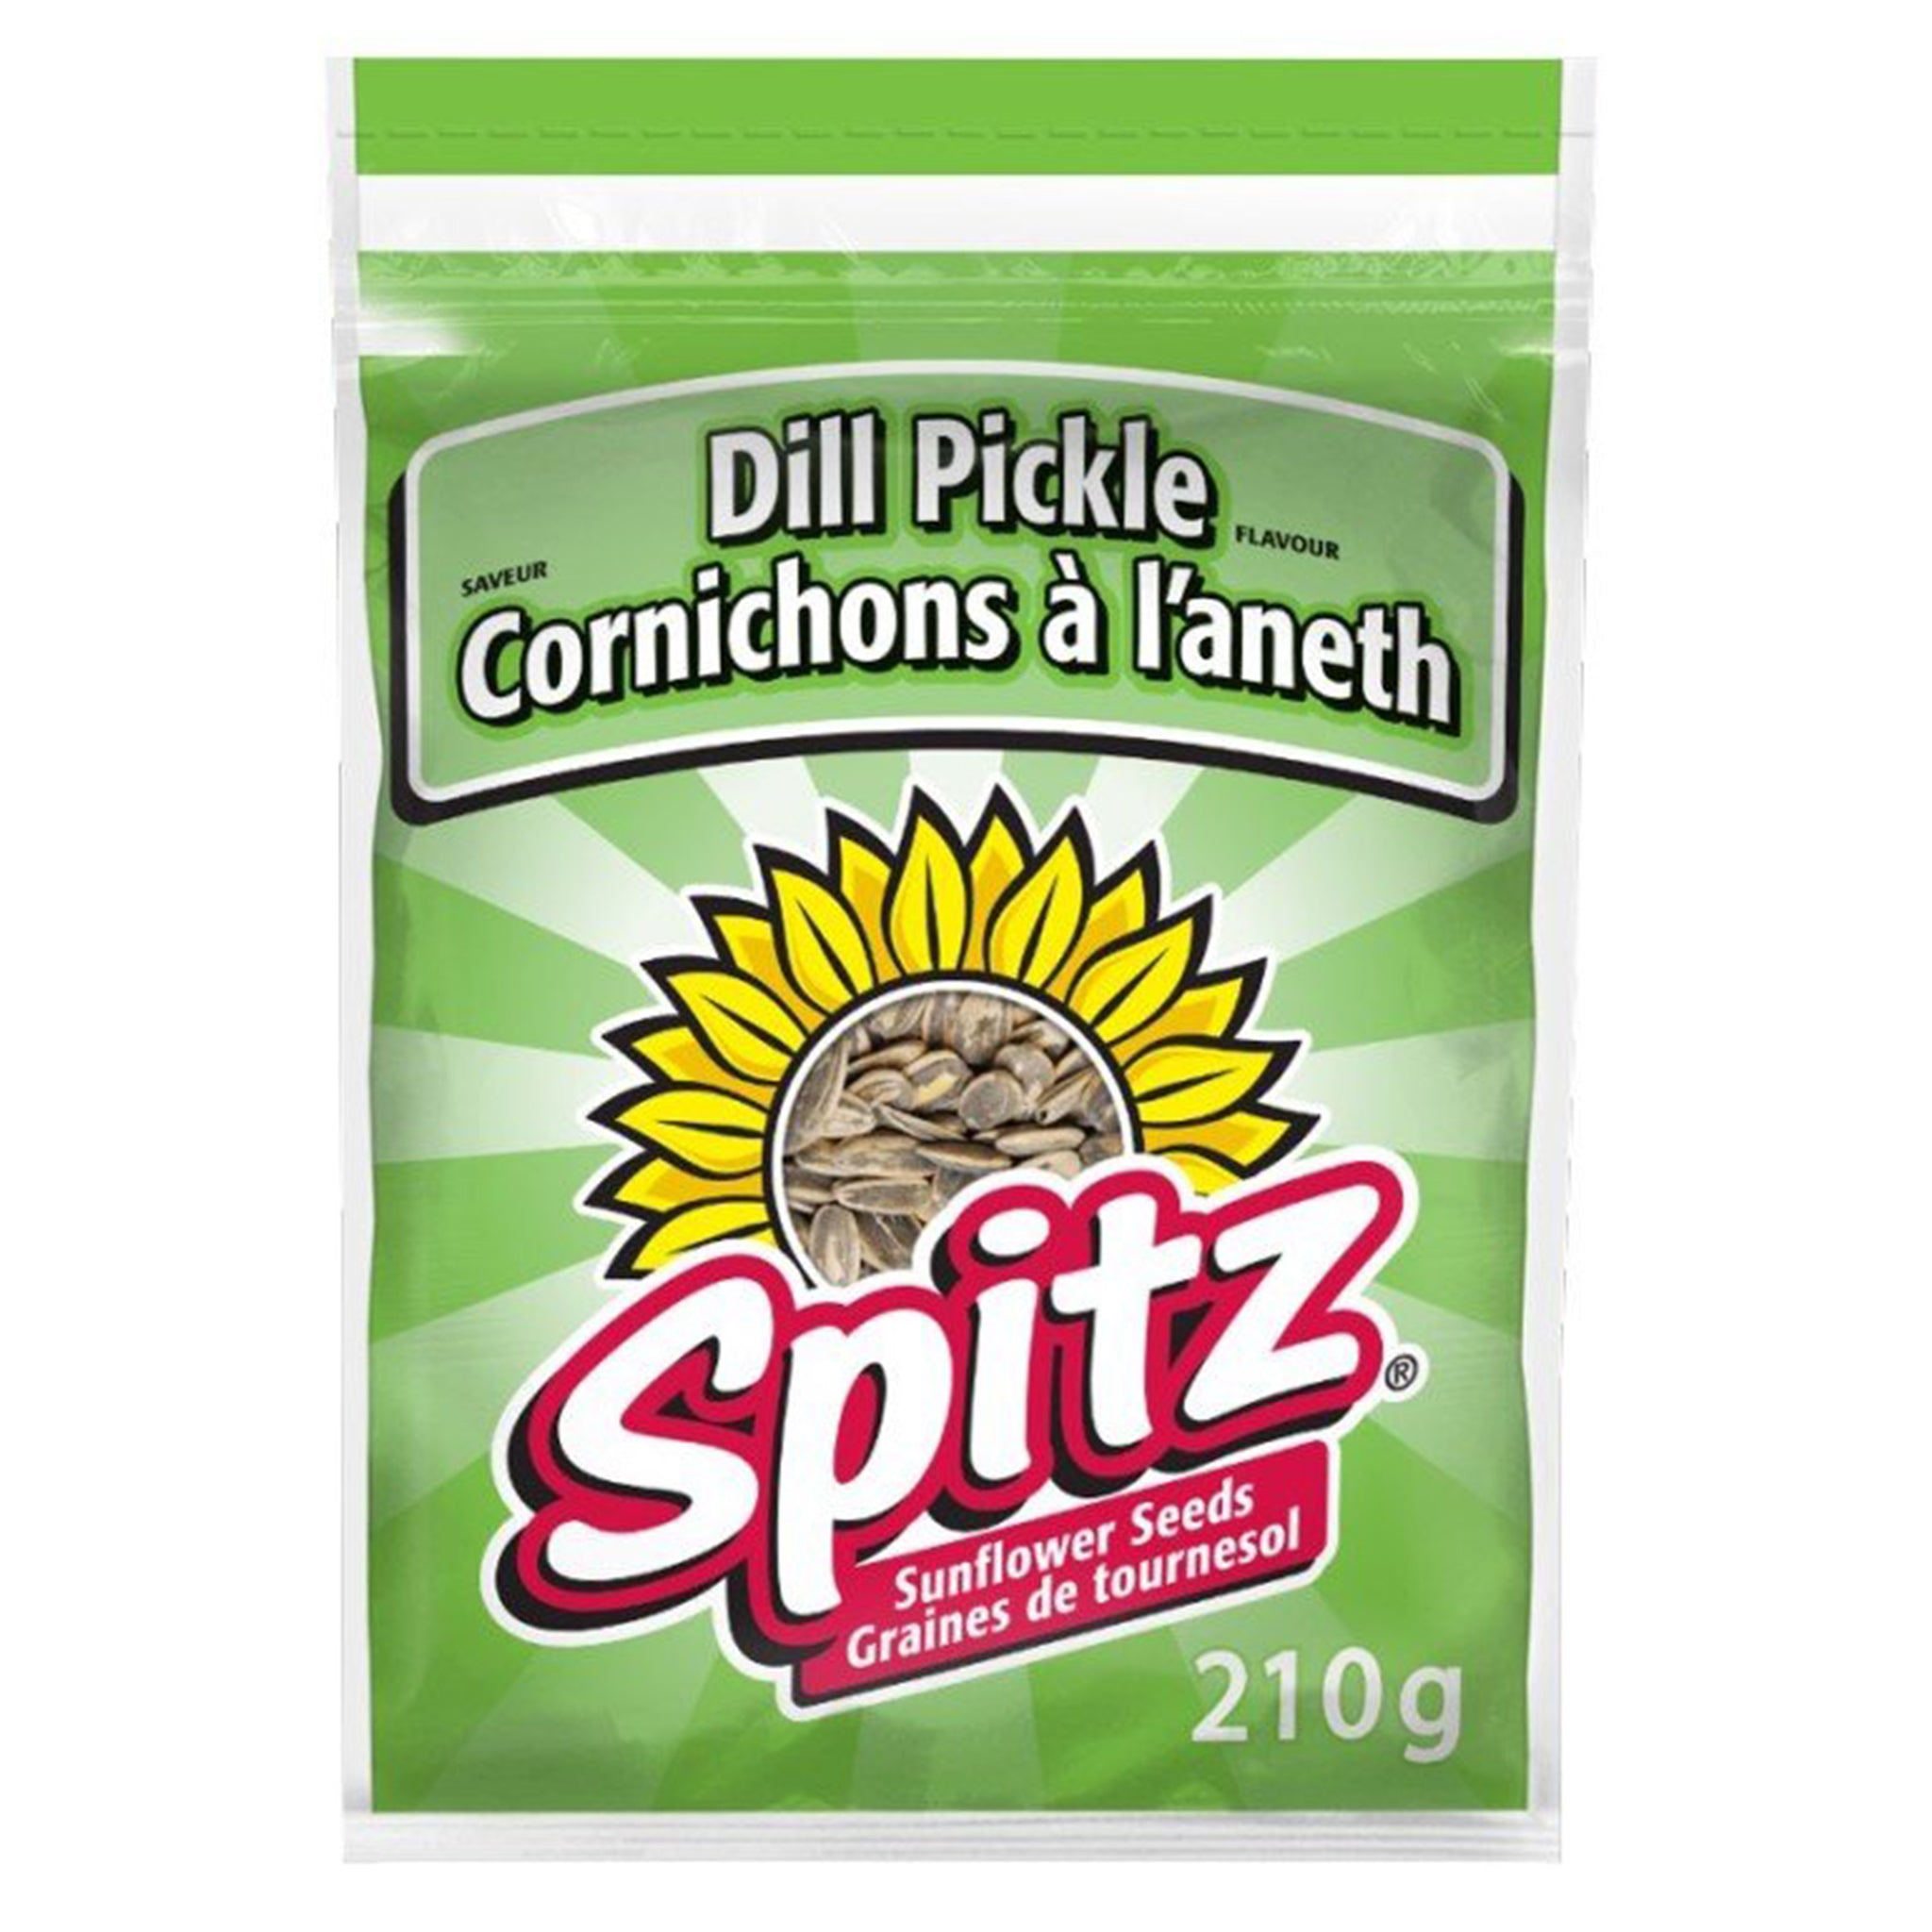 Spitz Sunflower Seeds - Dill Pickle